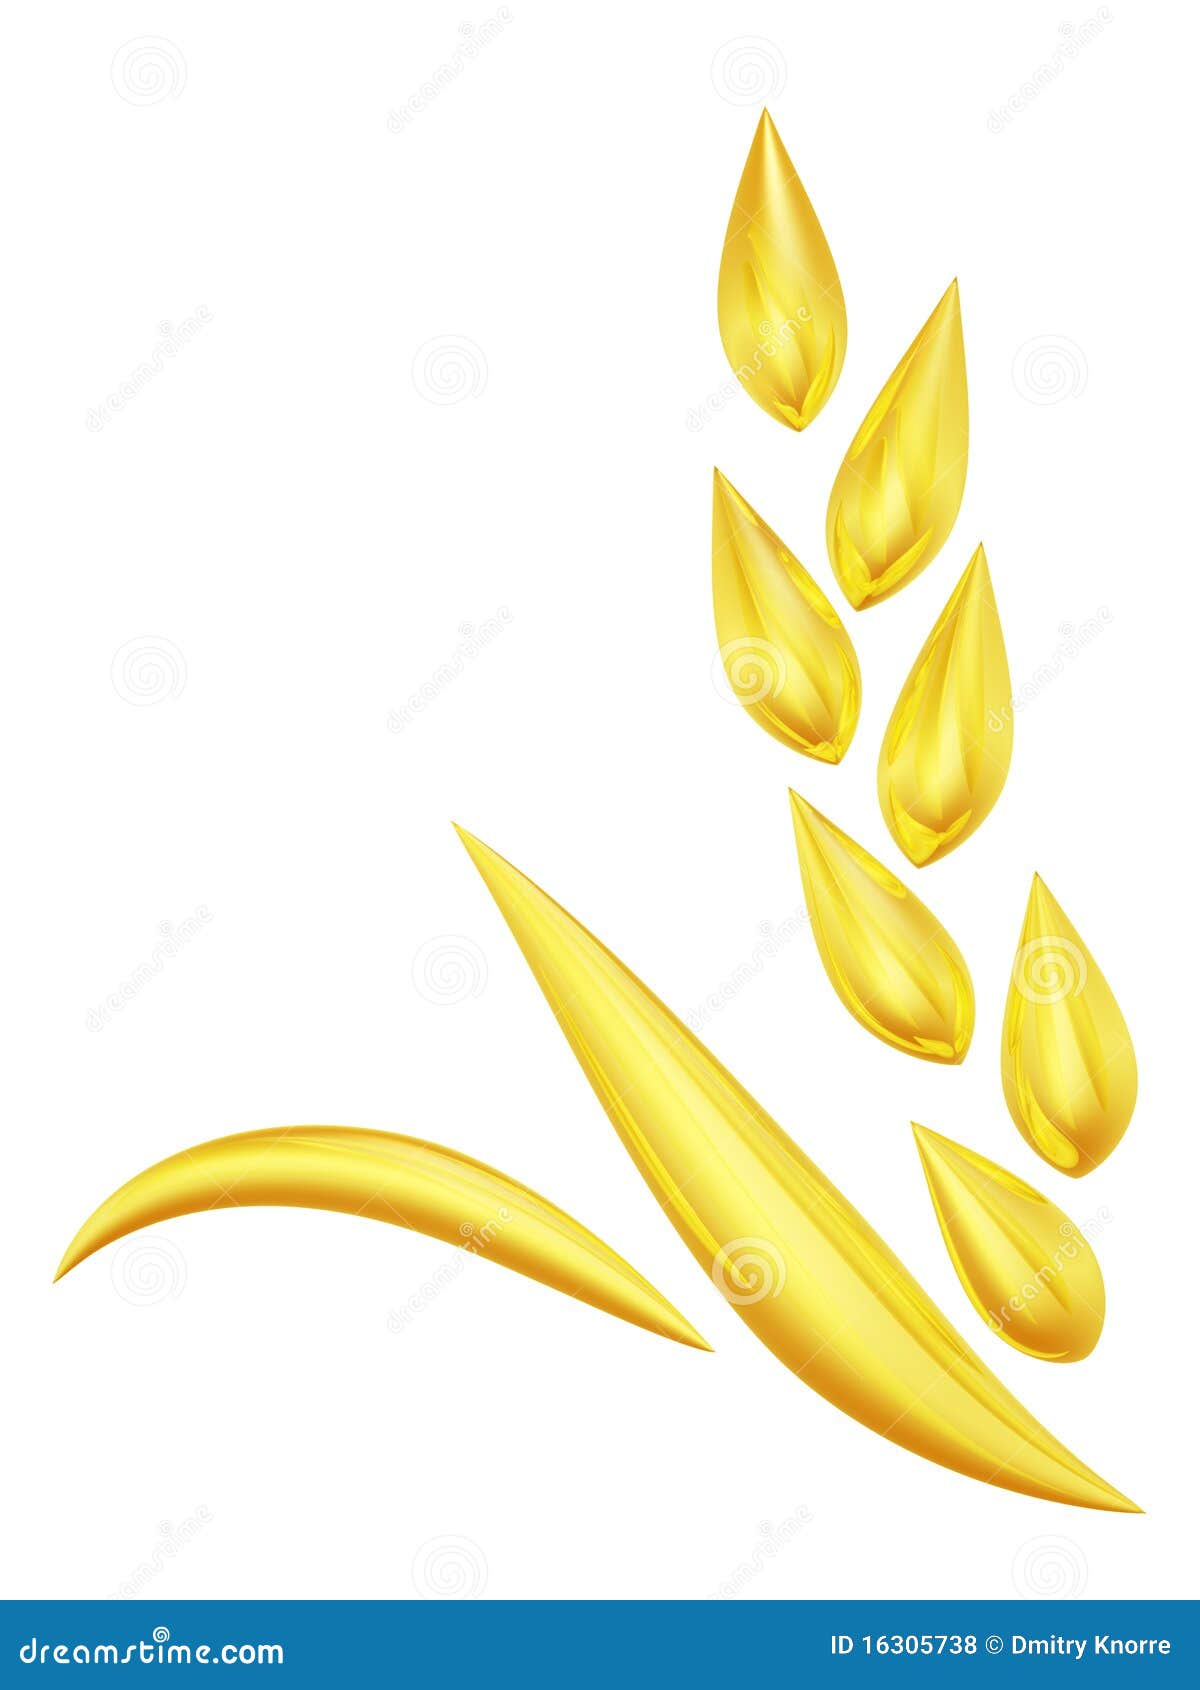 gold wheat spike